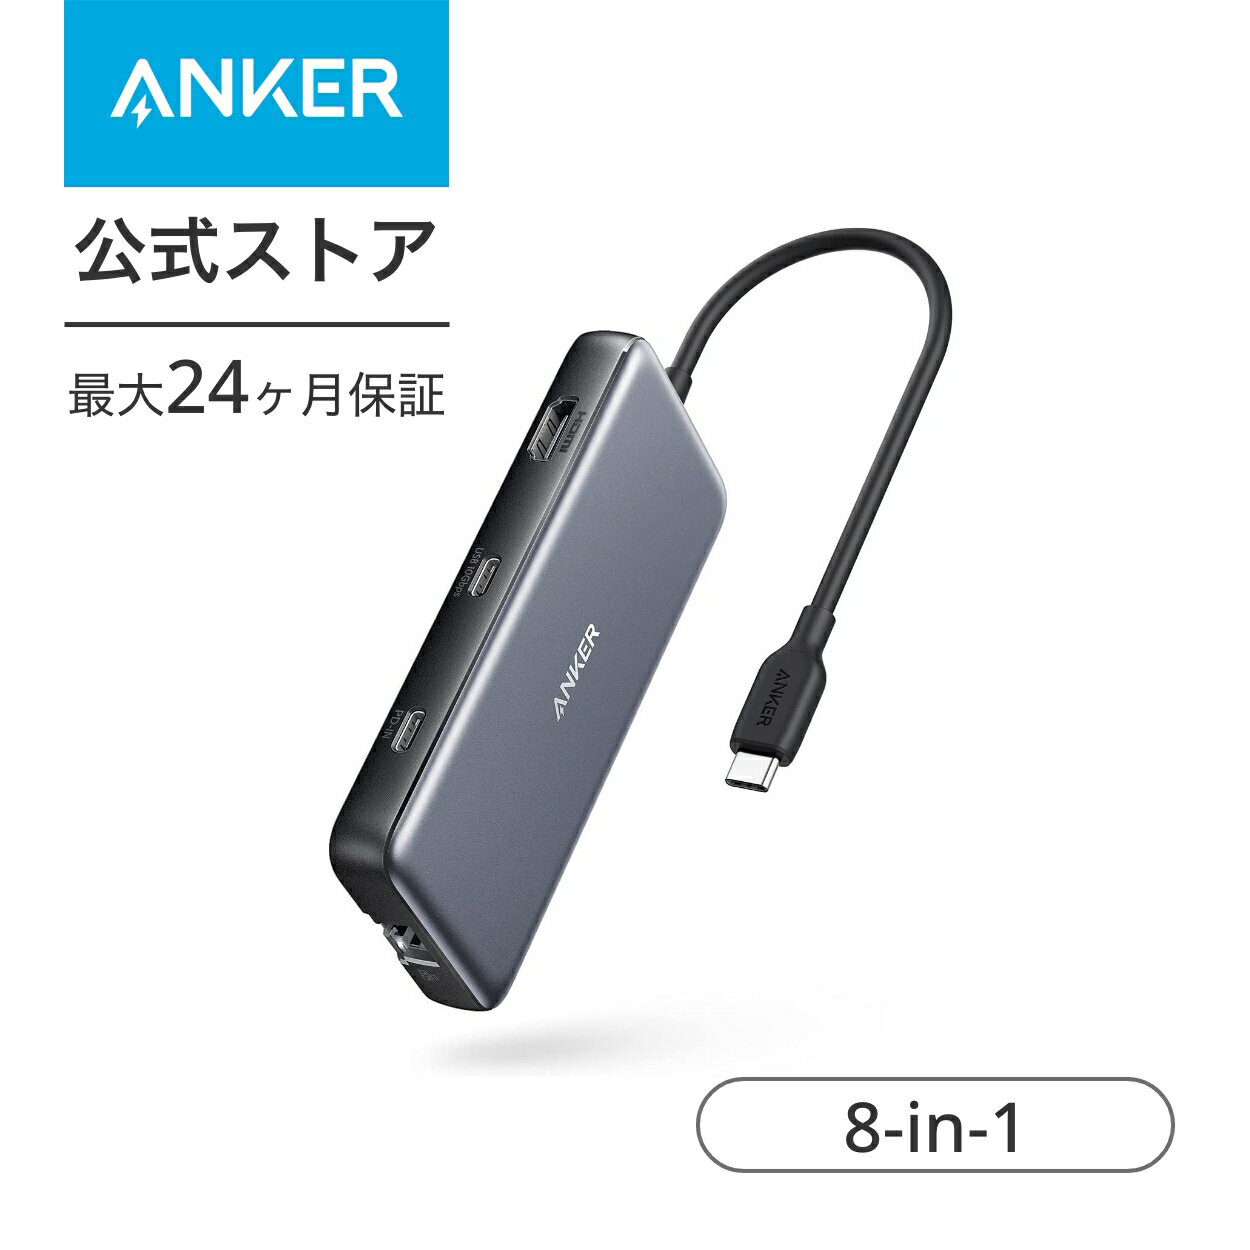 Anker PowerExpand 8-in-1 USB-C PD 10Gbps データ ハブ 100W USB Power Delivery 対応 USB-Cポート 4K出力対応 HDMIポート 10Gbps 高速データ転送 USB-Cポート USB-Aポート 1Gbps イーサネット microSD&SDカード スロット搭載